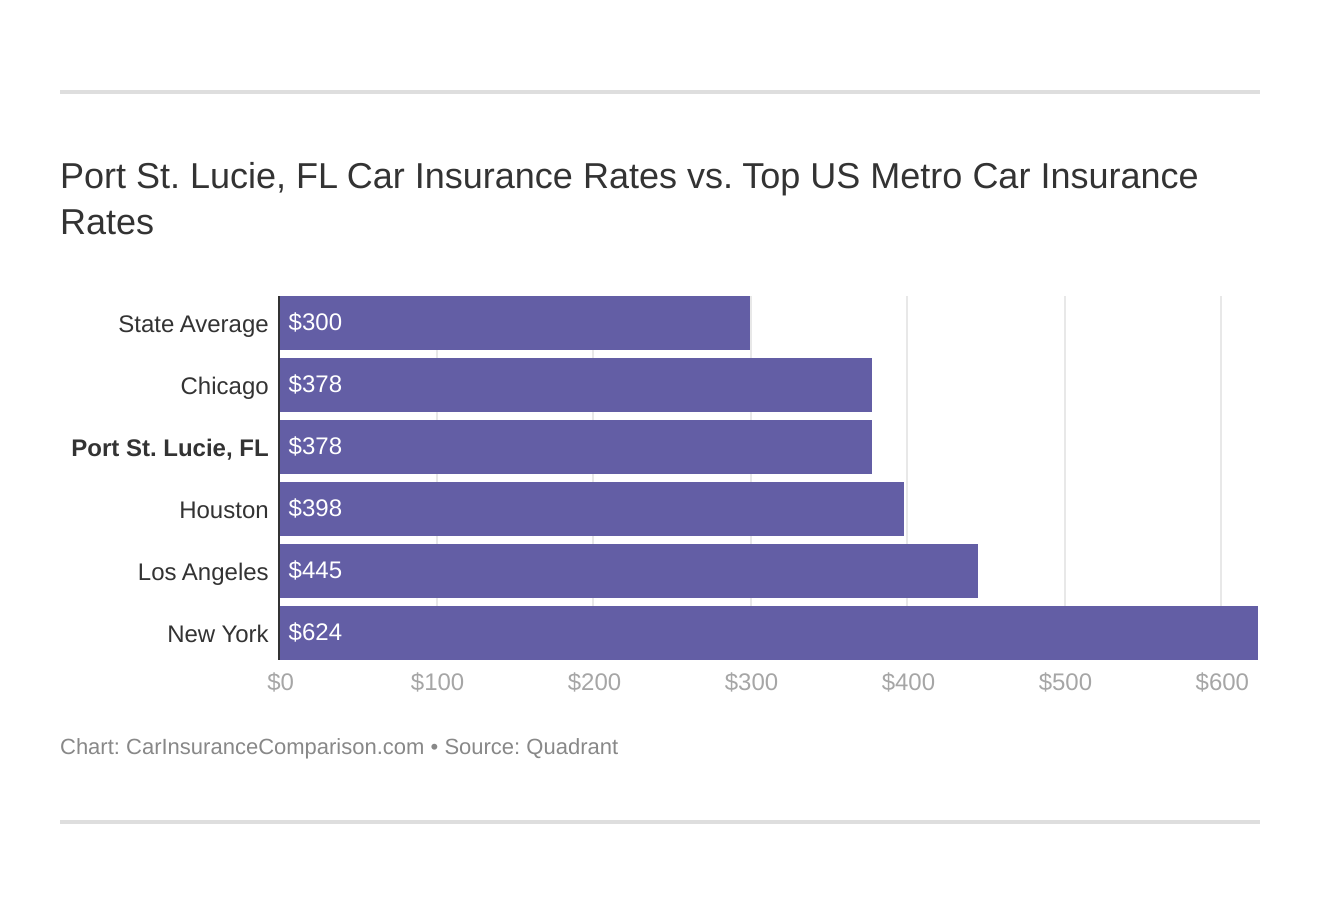 Port St. Lucie, FL Car Insurance Rates vs. Top US Metro Car Insurance Rates